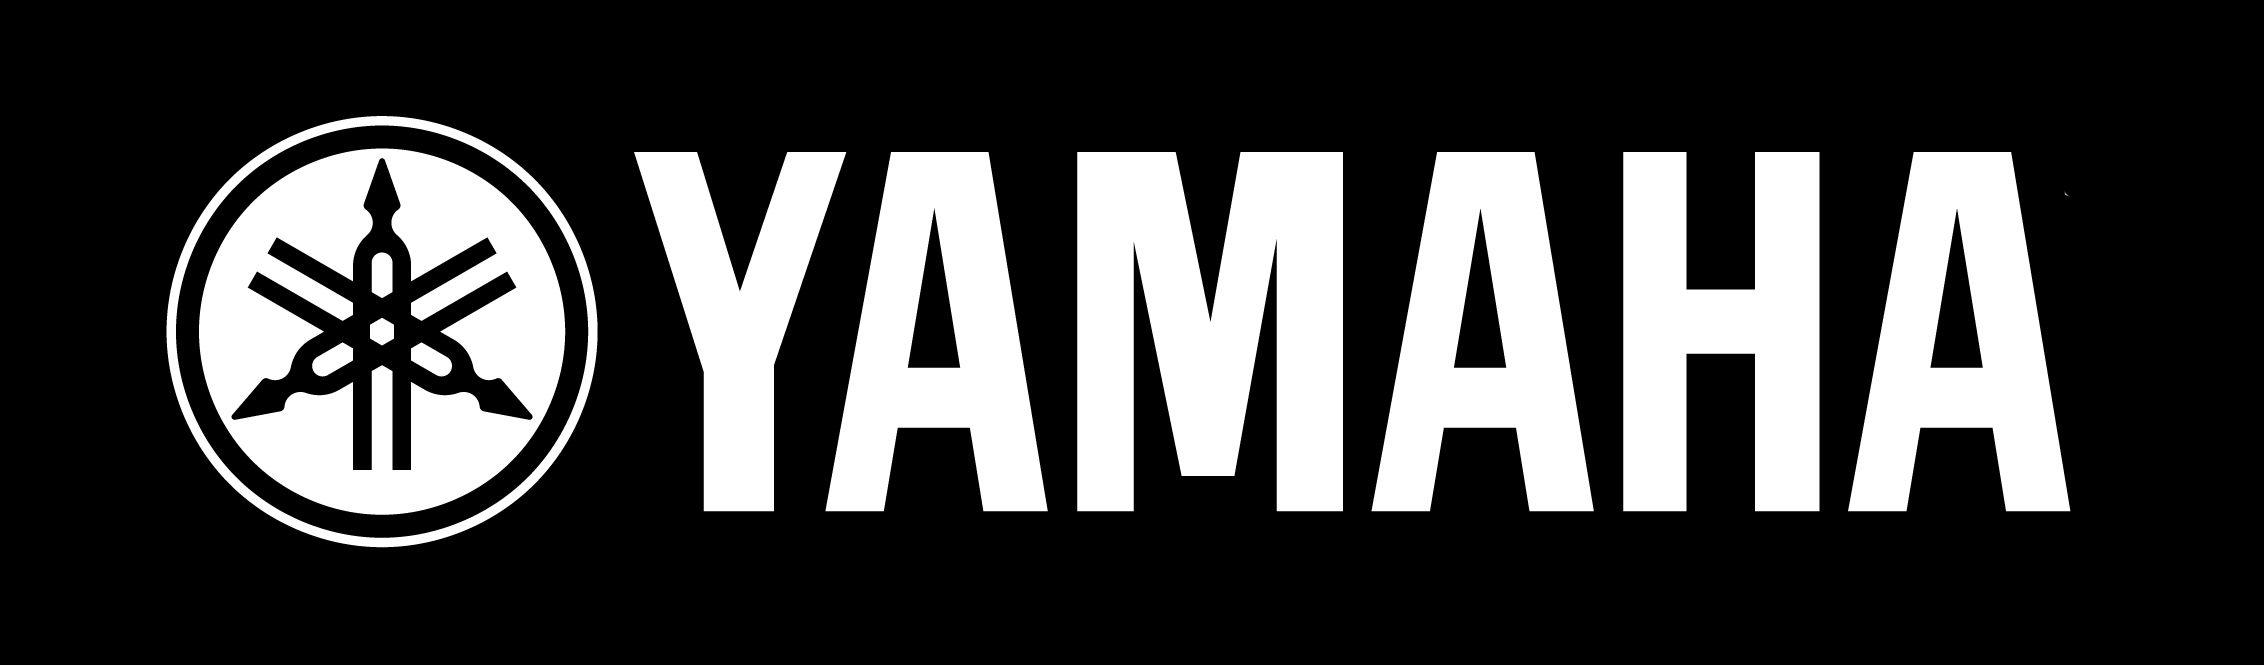 Yamalube Logo - Yamaha Advertising Graphics